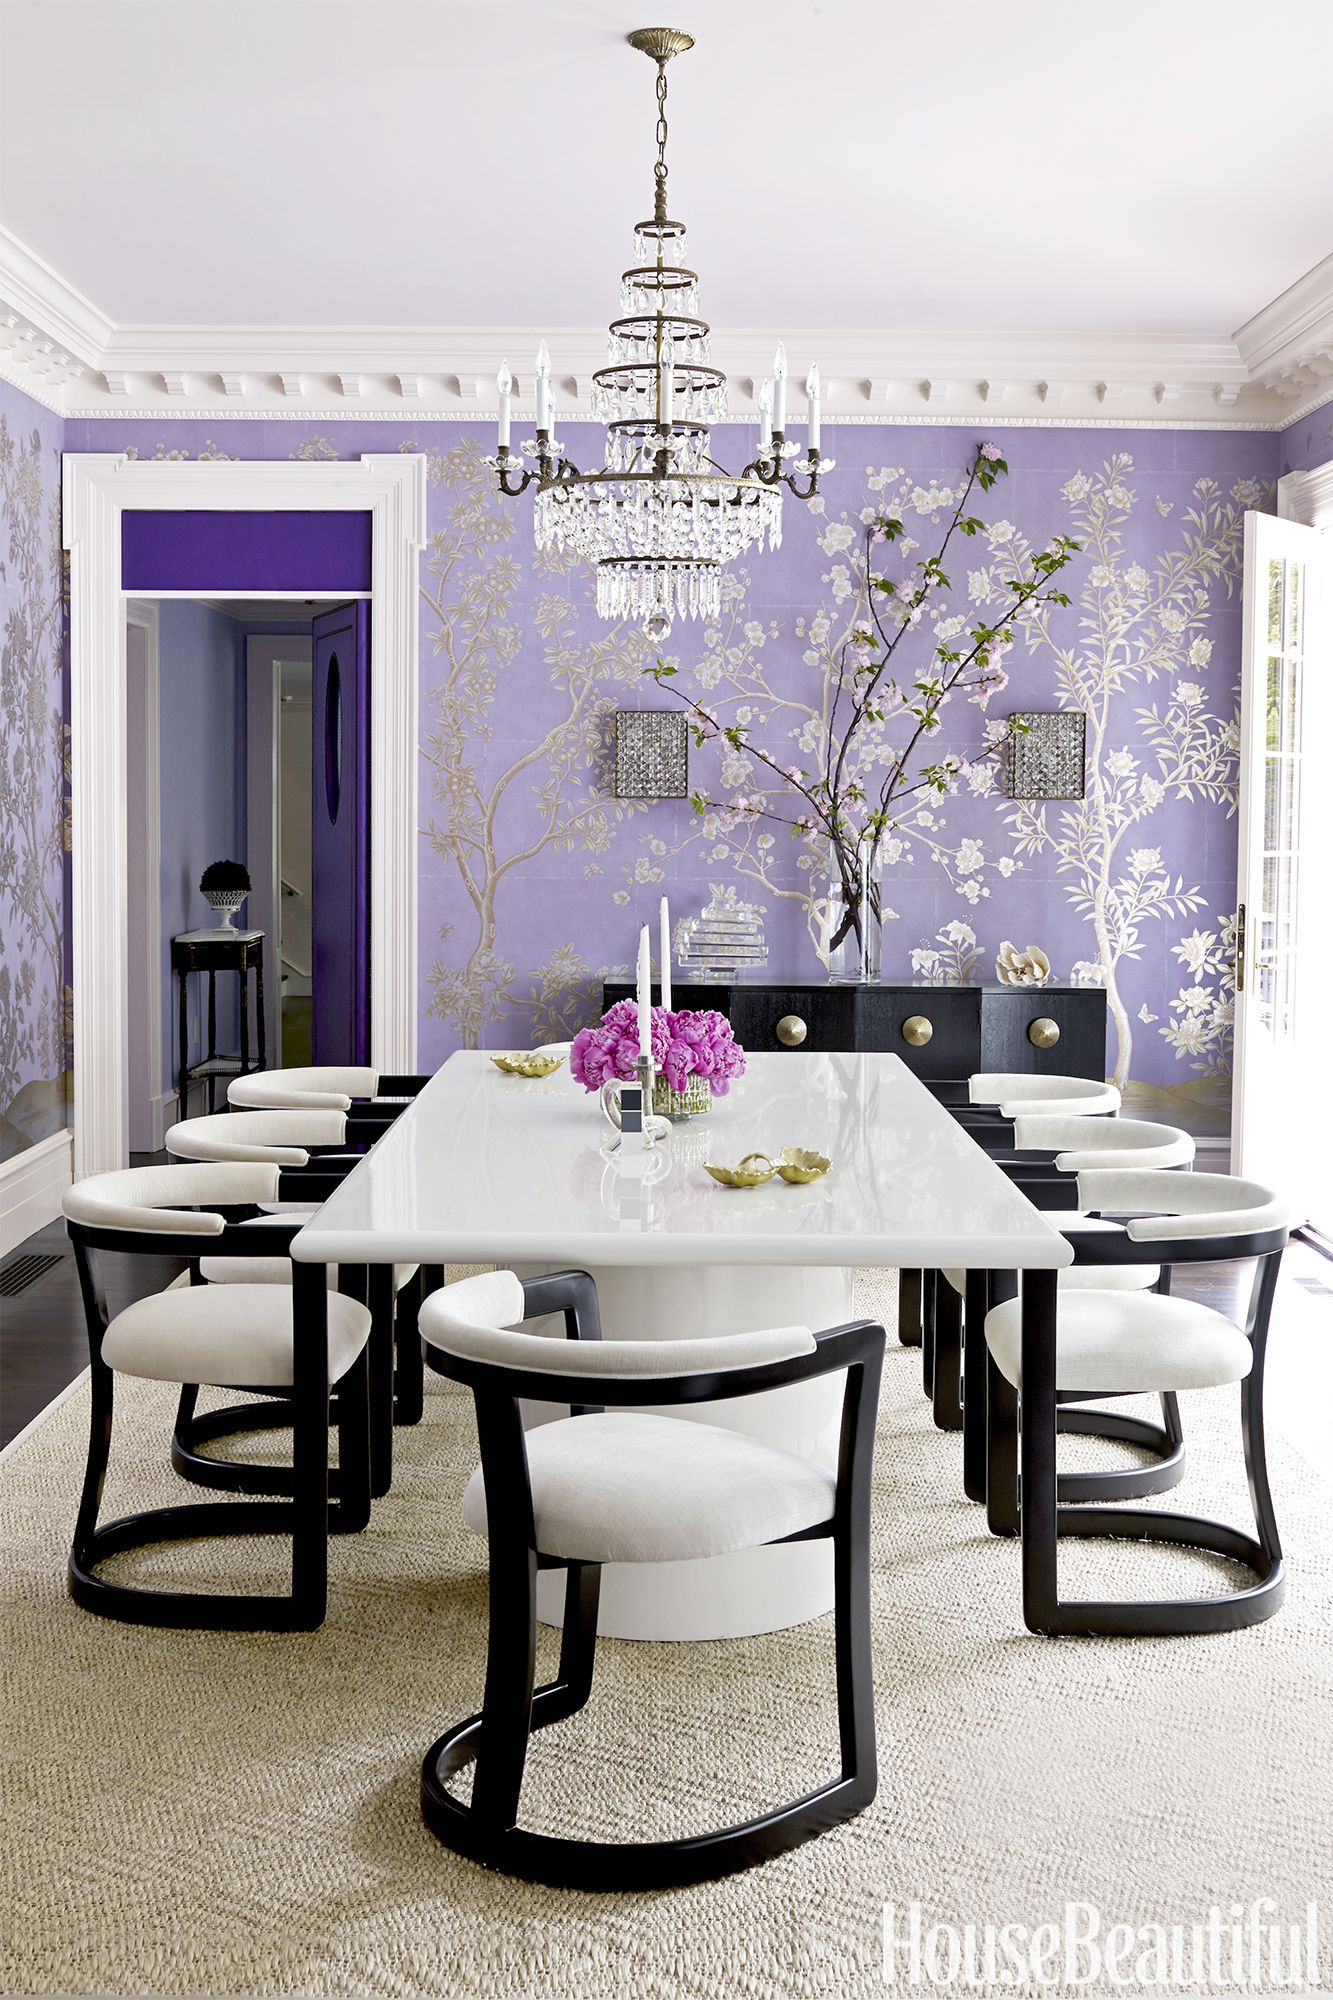 Light Lavender Aesthetic Wallpapers  Aesthetic Purple Wallpapers